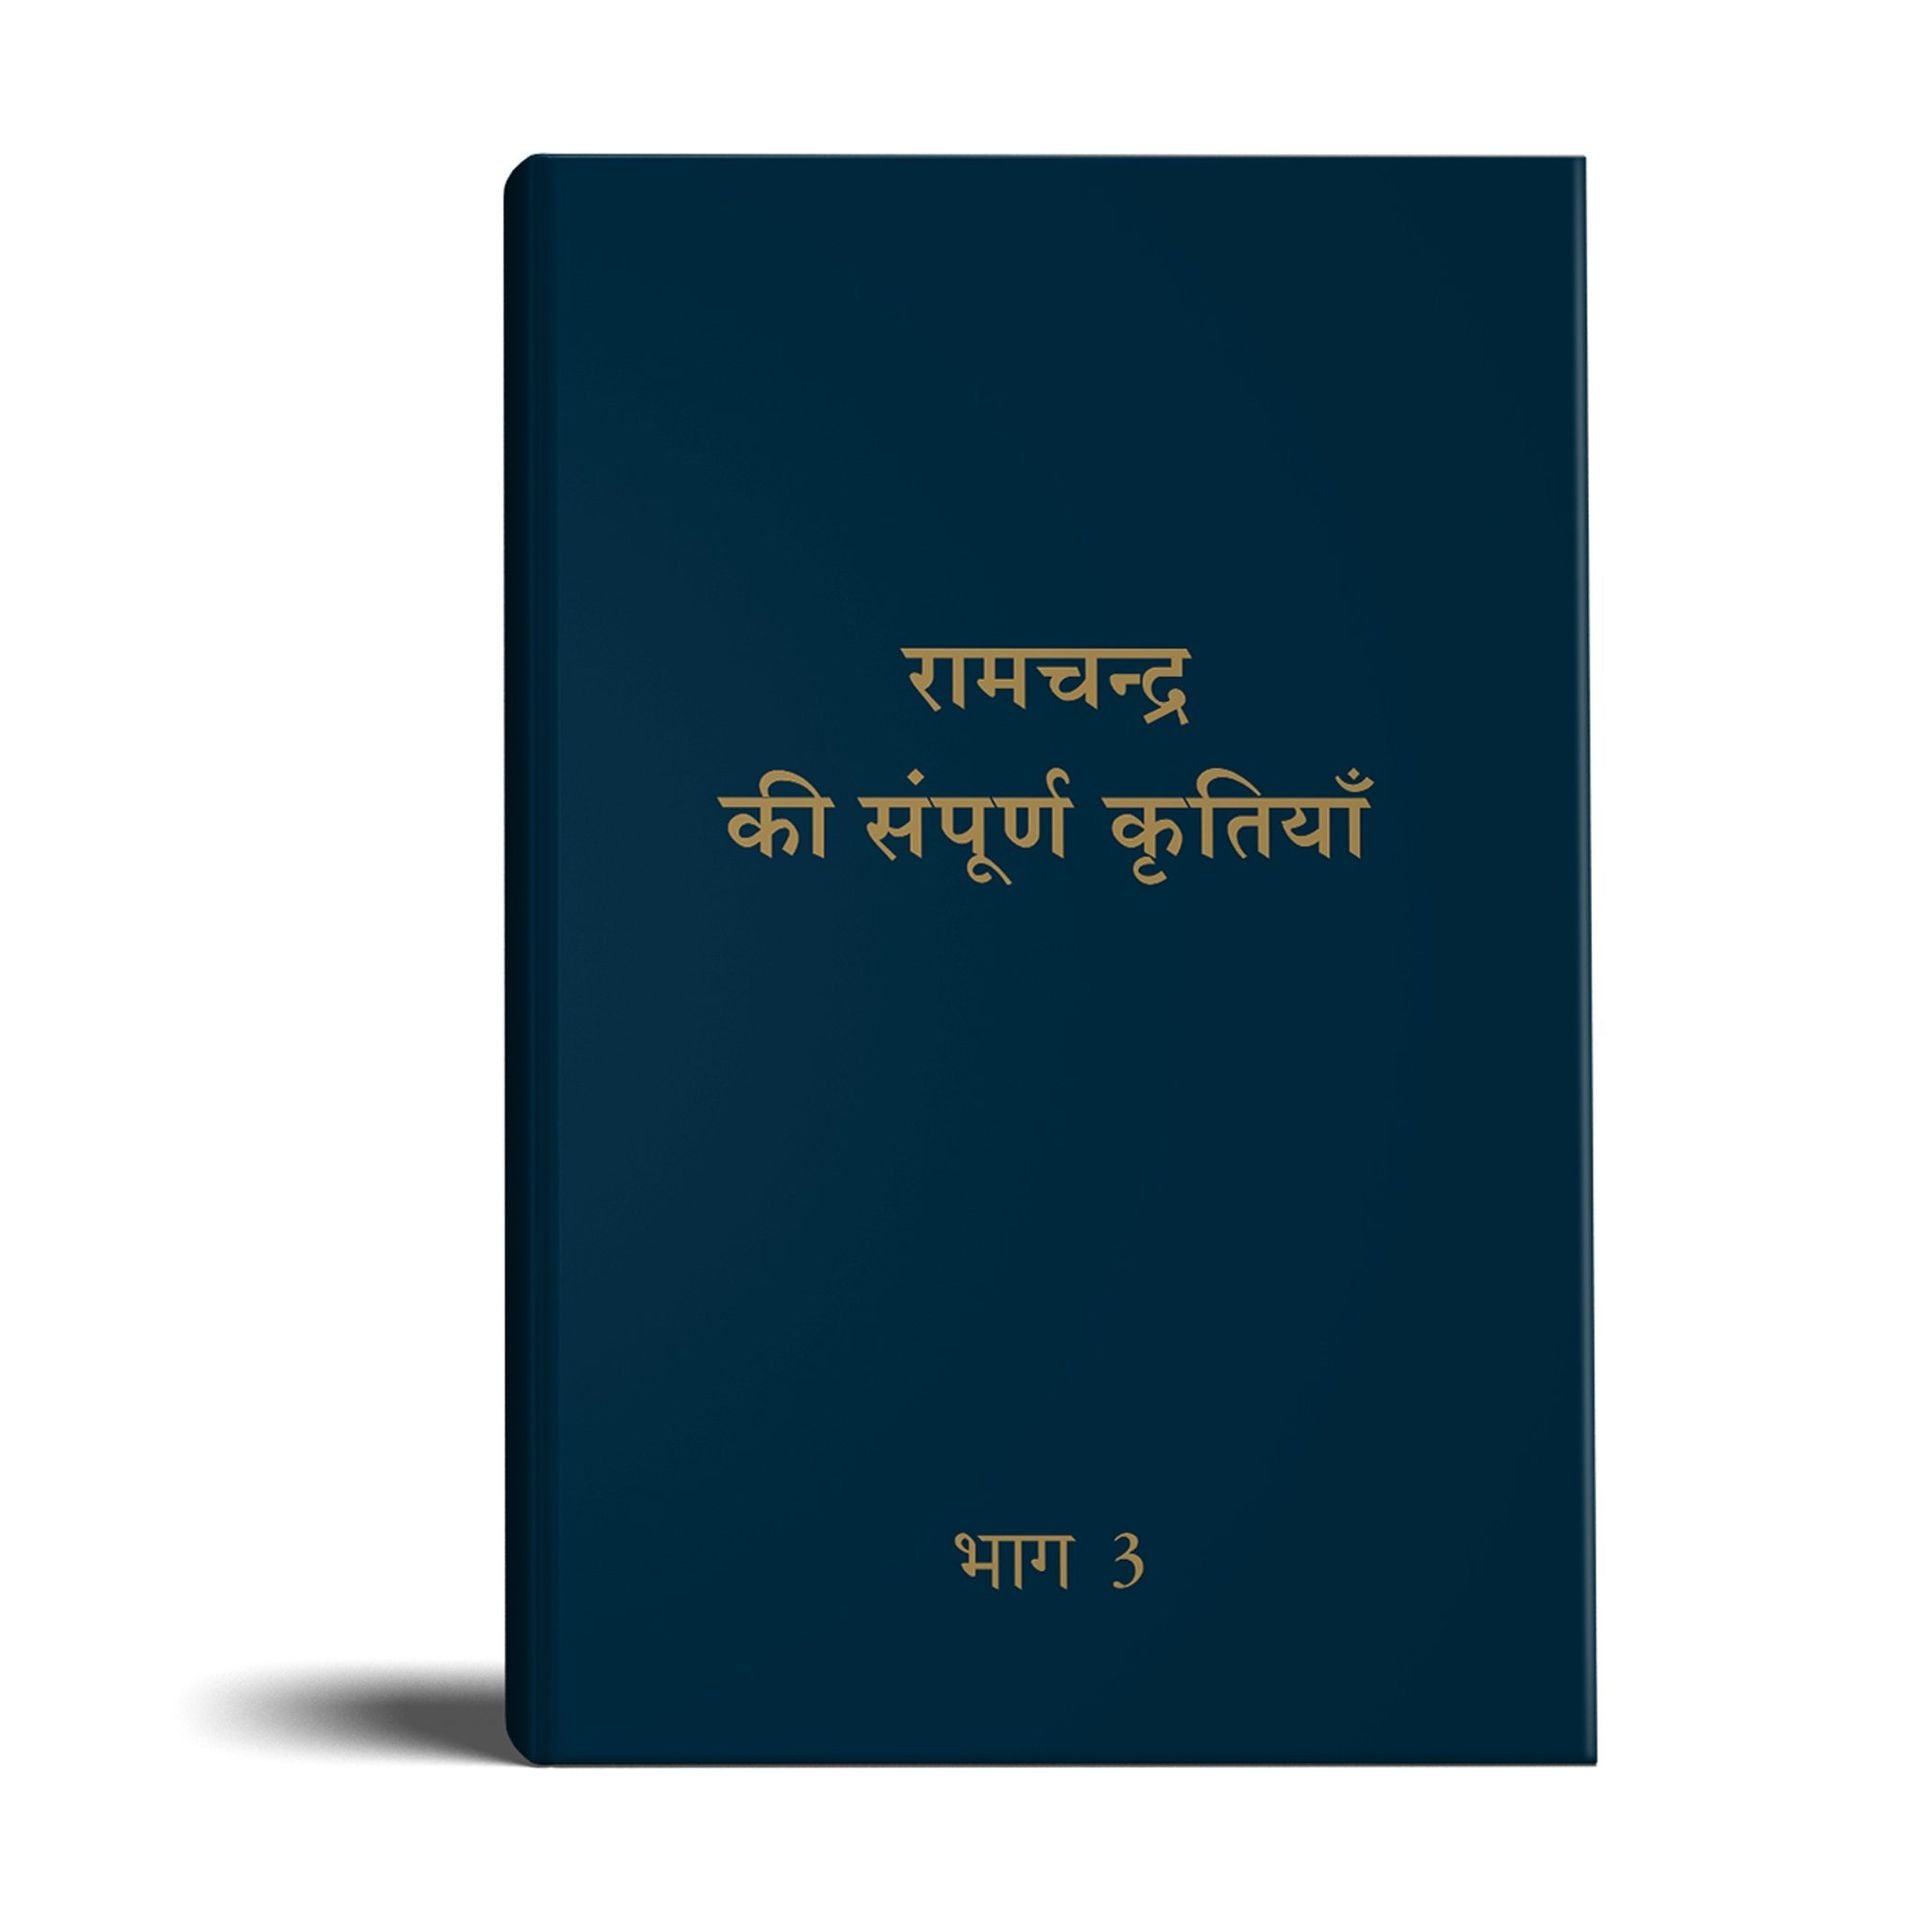 Complete Works of Ram Chandra (Lalaji) - Volume 3 - hfnl!fe